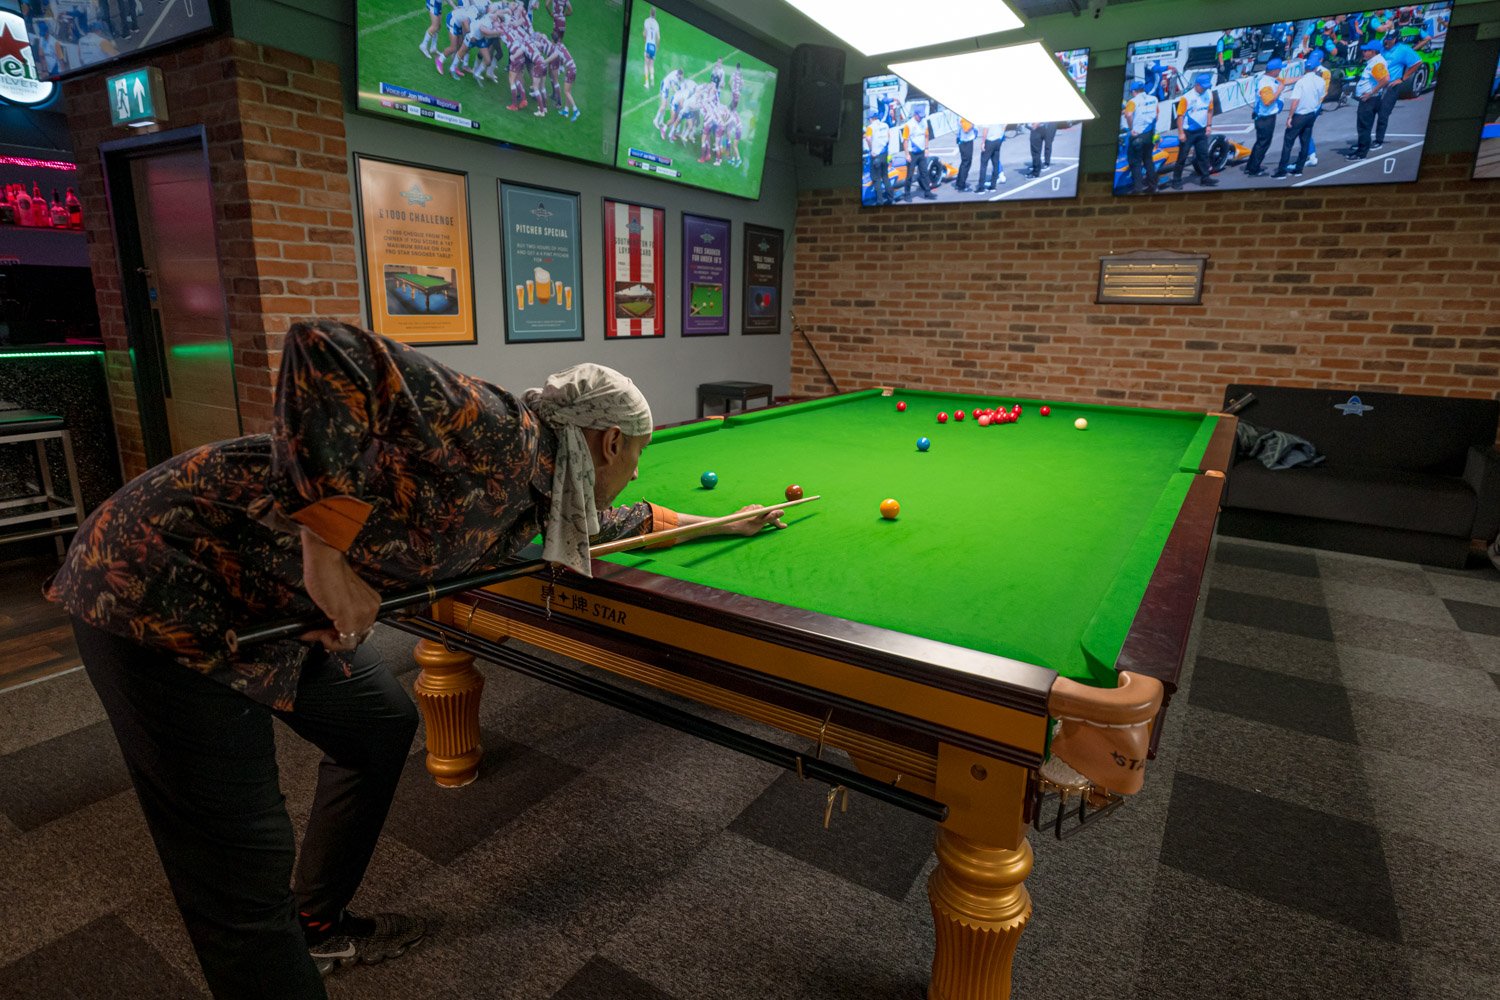 Sharkeys_Sports_Bar_Southampton_Live_Sports_Poole_Snooker_Table_Tennis_VIP_Rooms_Consoles-34.jpg